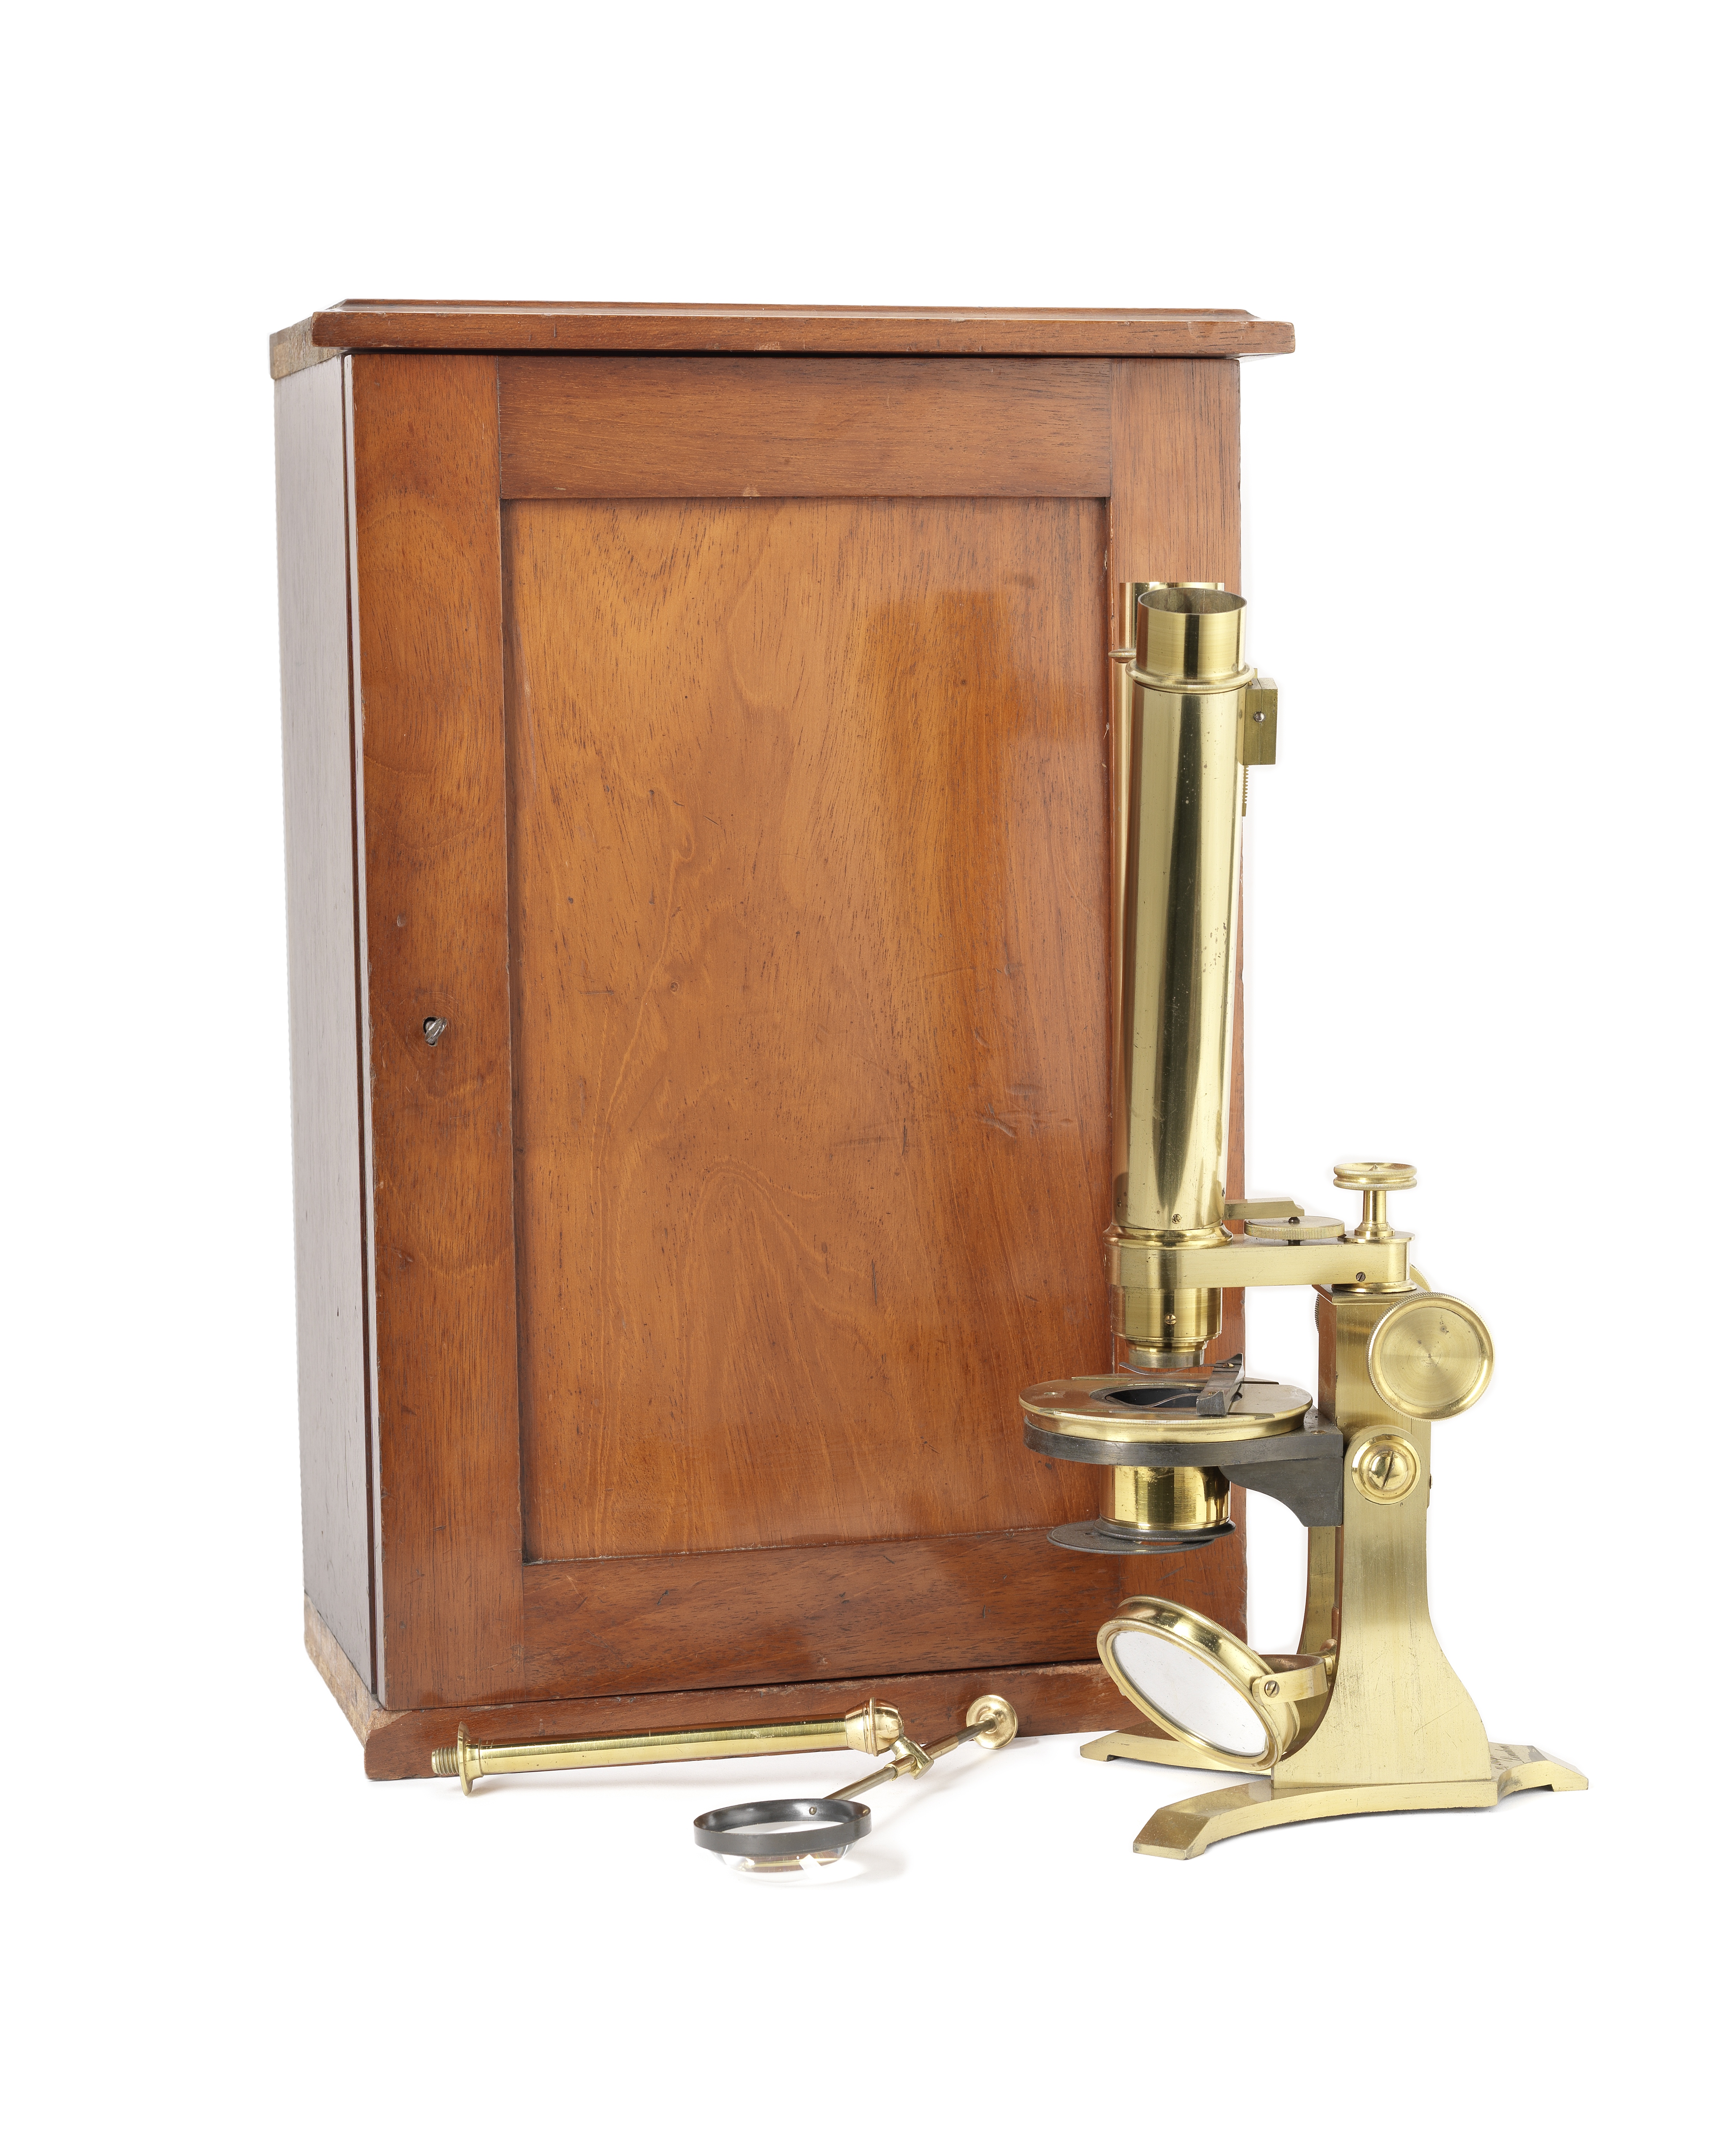 A Baker binocular compound microscope, English, late 19th century,